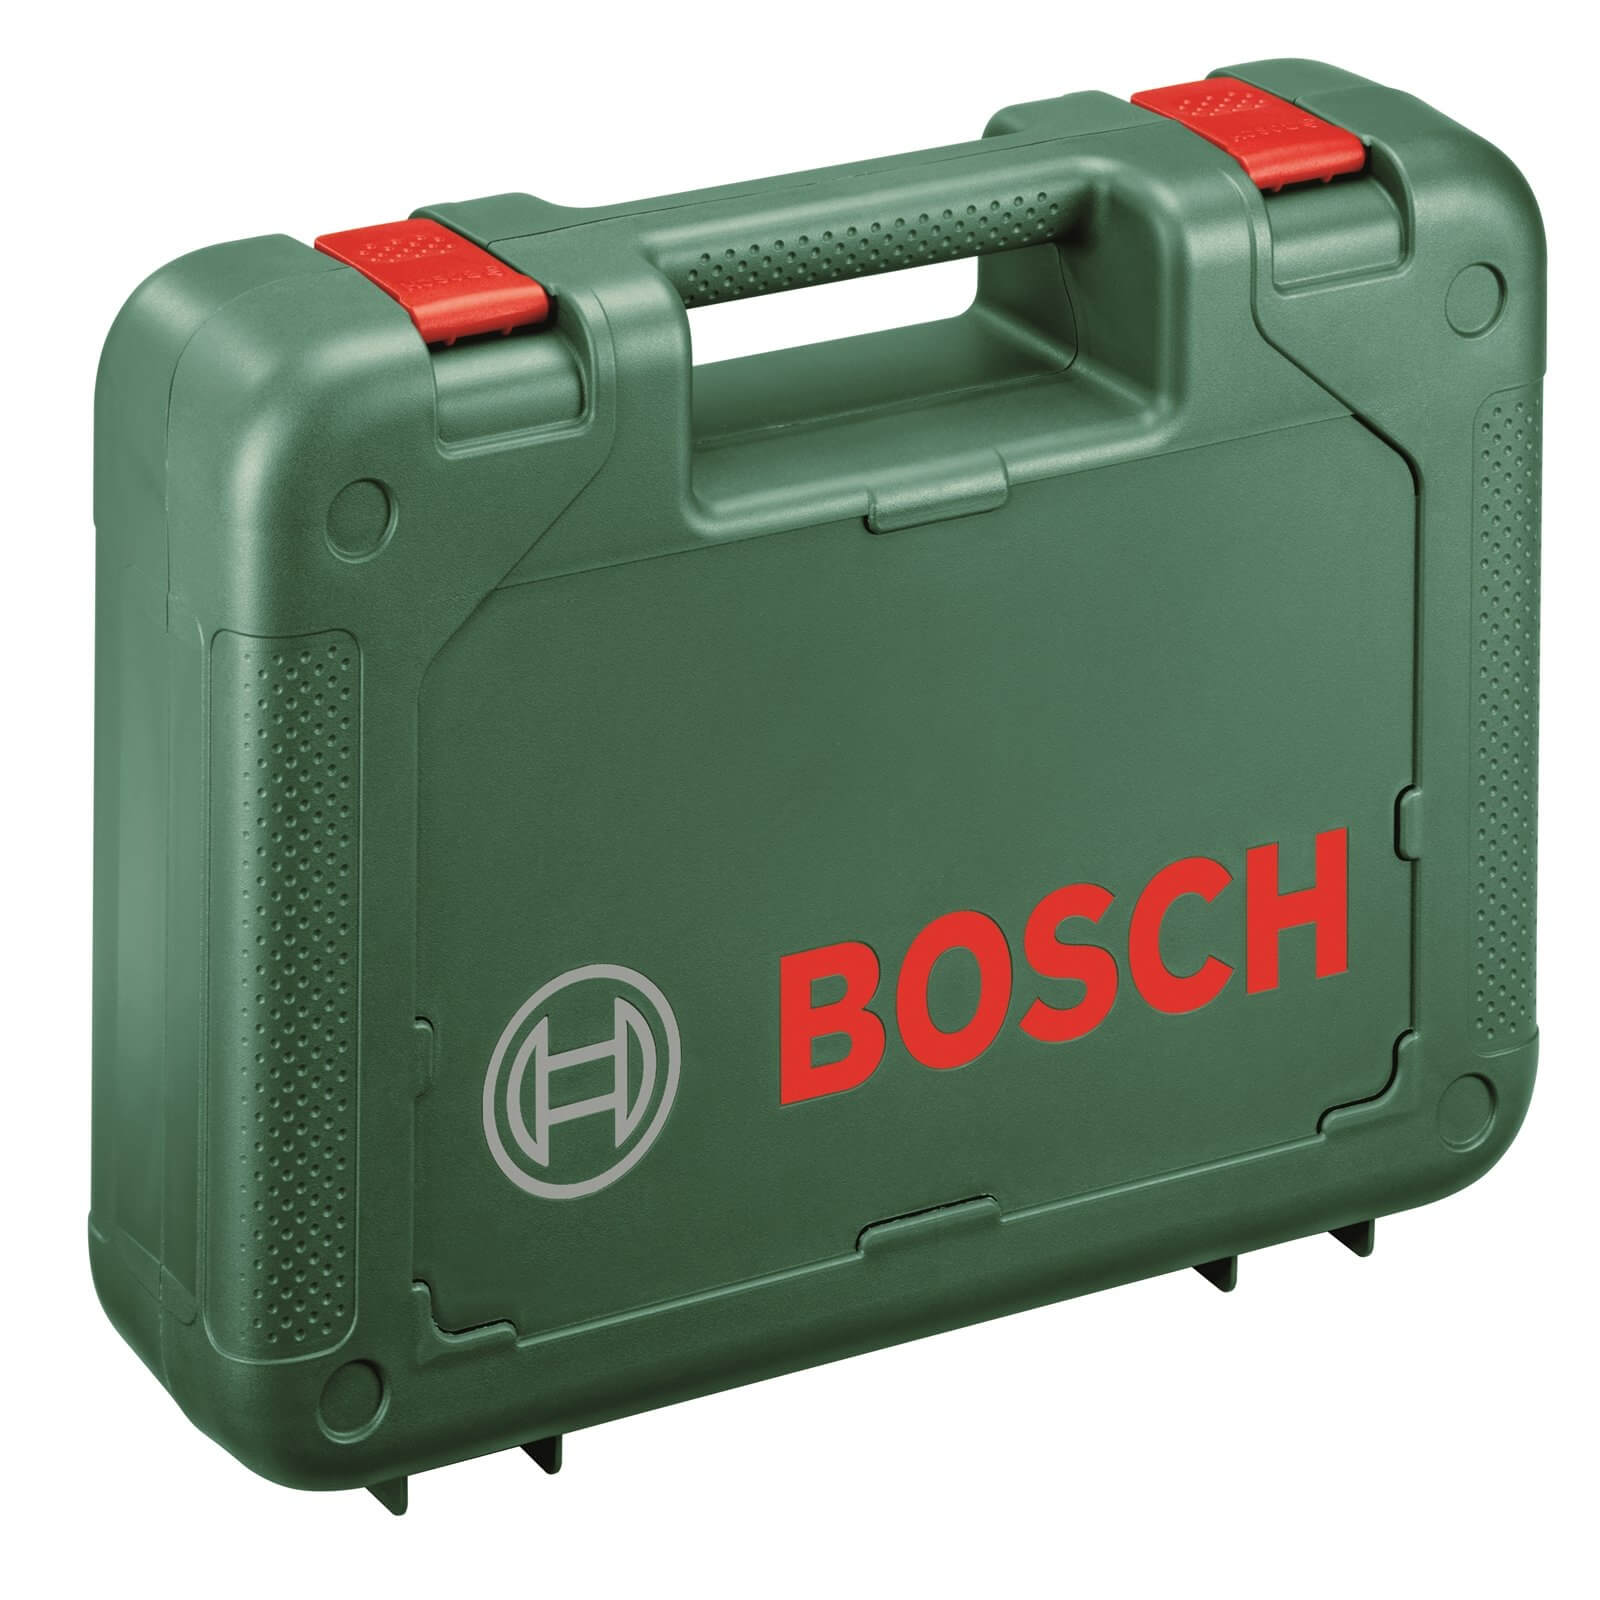 Bosch PST 800 PEL Electric 530W Compact Jigsaw